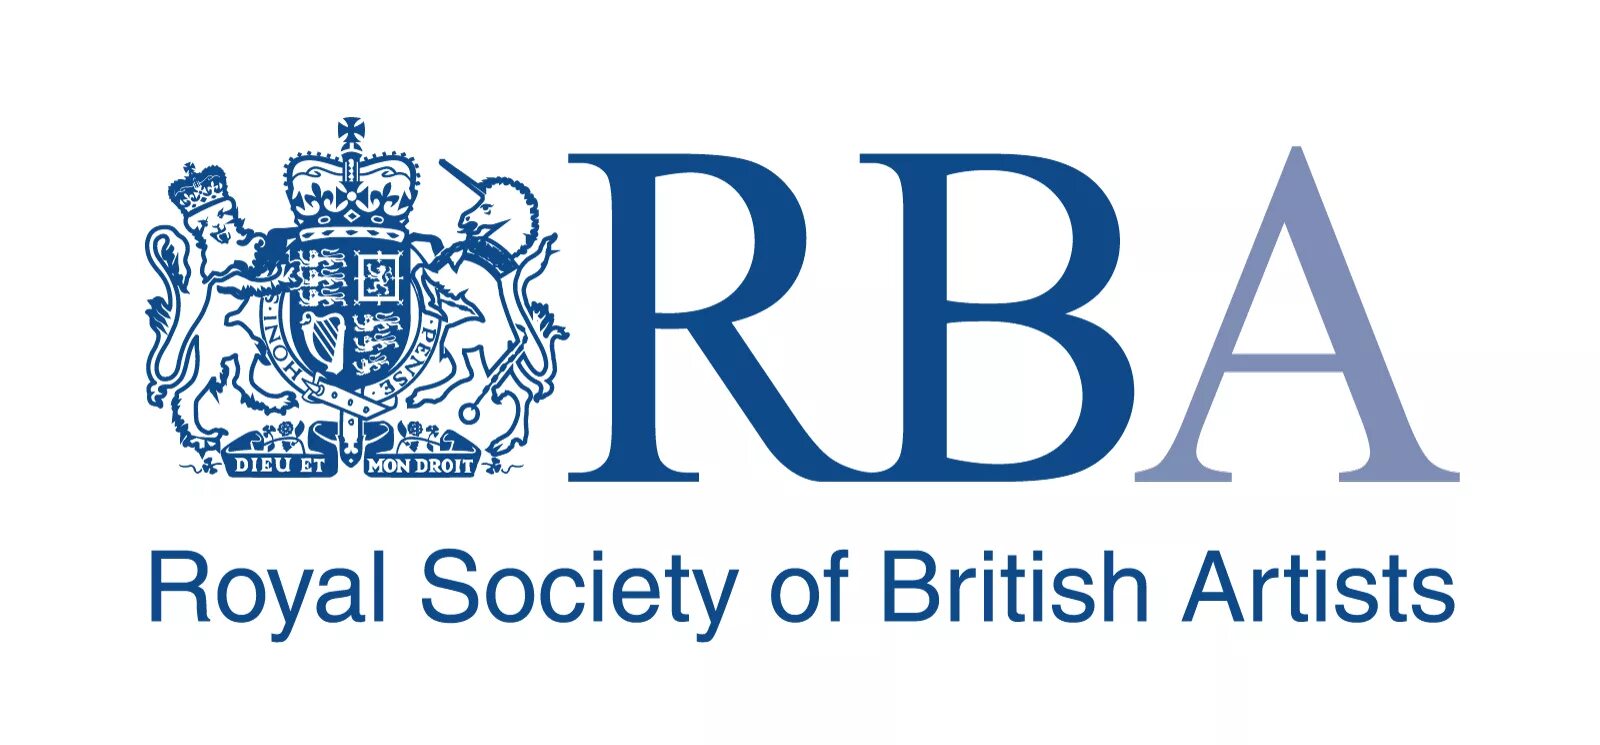 Royal society. Royal Society of British artists. Королевское общество. Ниток Royal Society. Эмблема Society of artists USA.